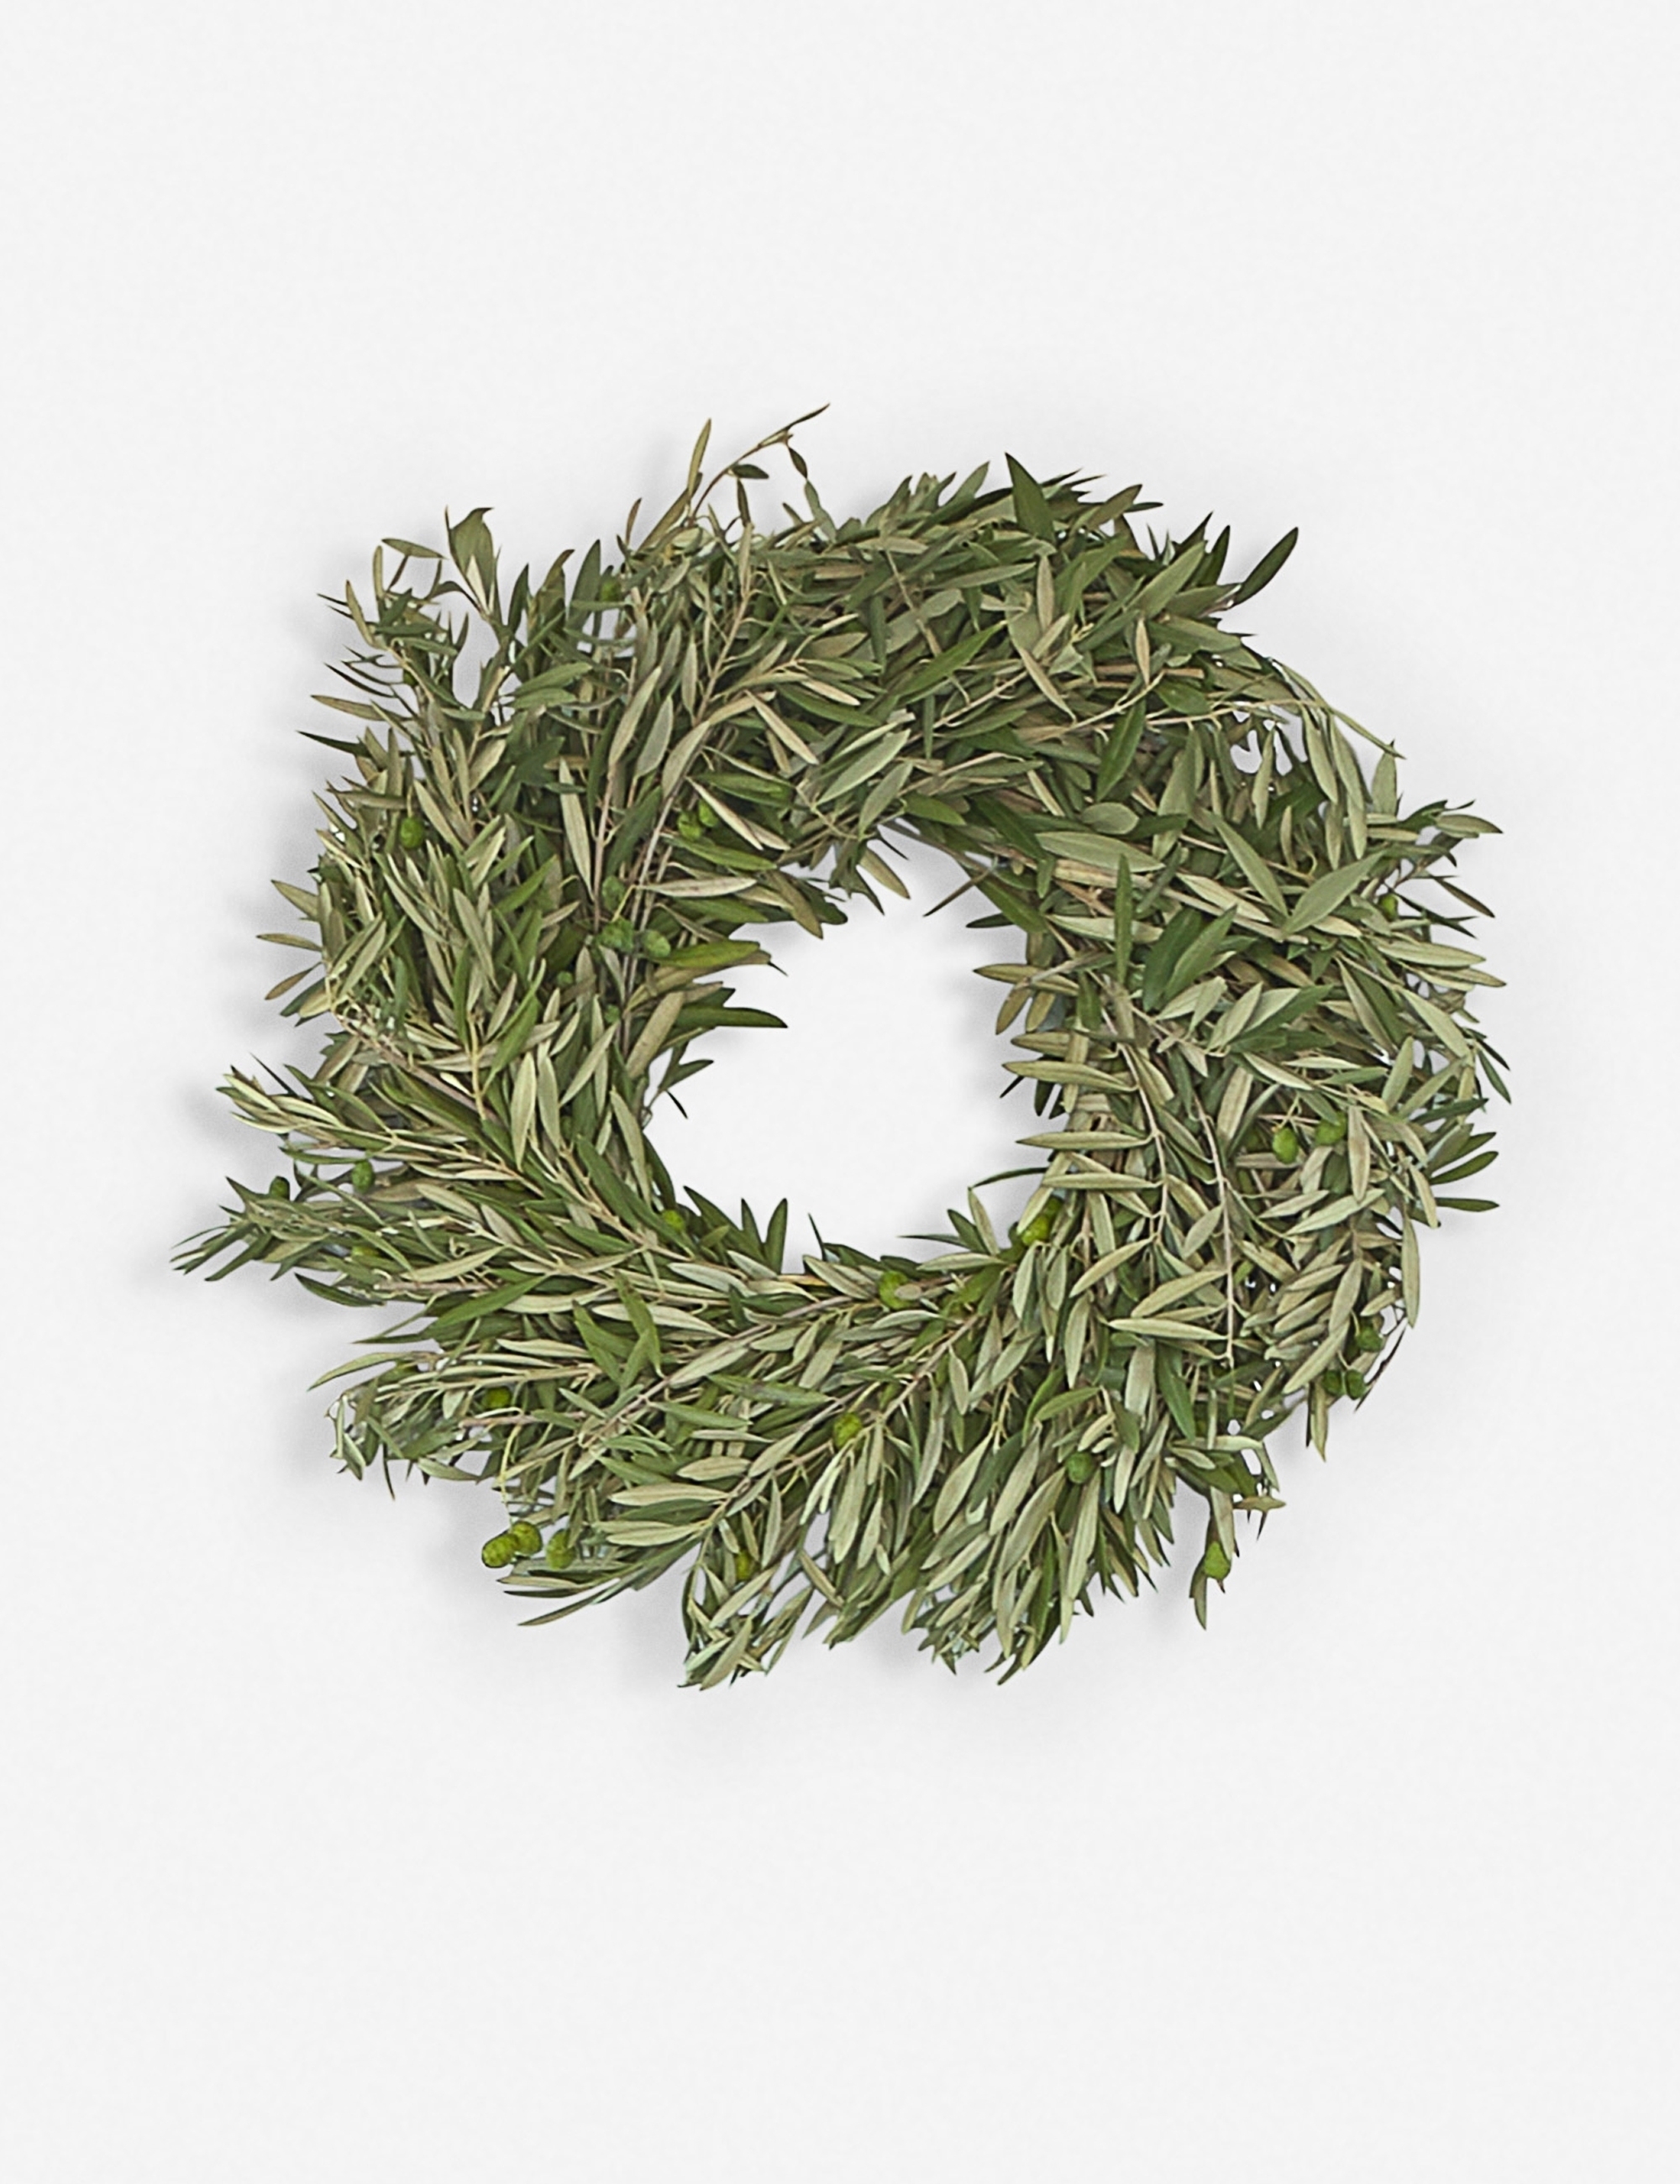 Rosemary Wreath - Image 0